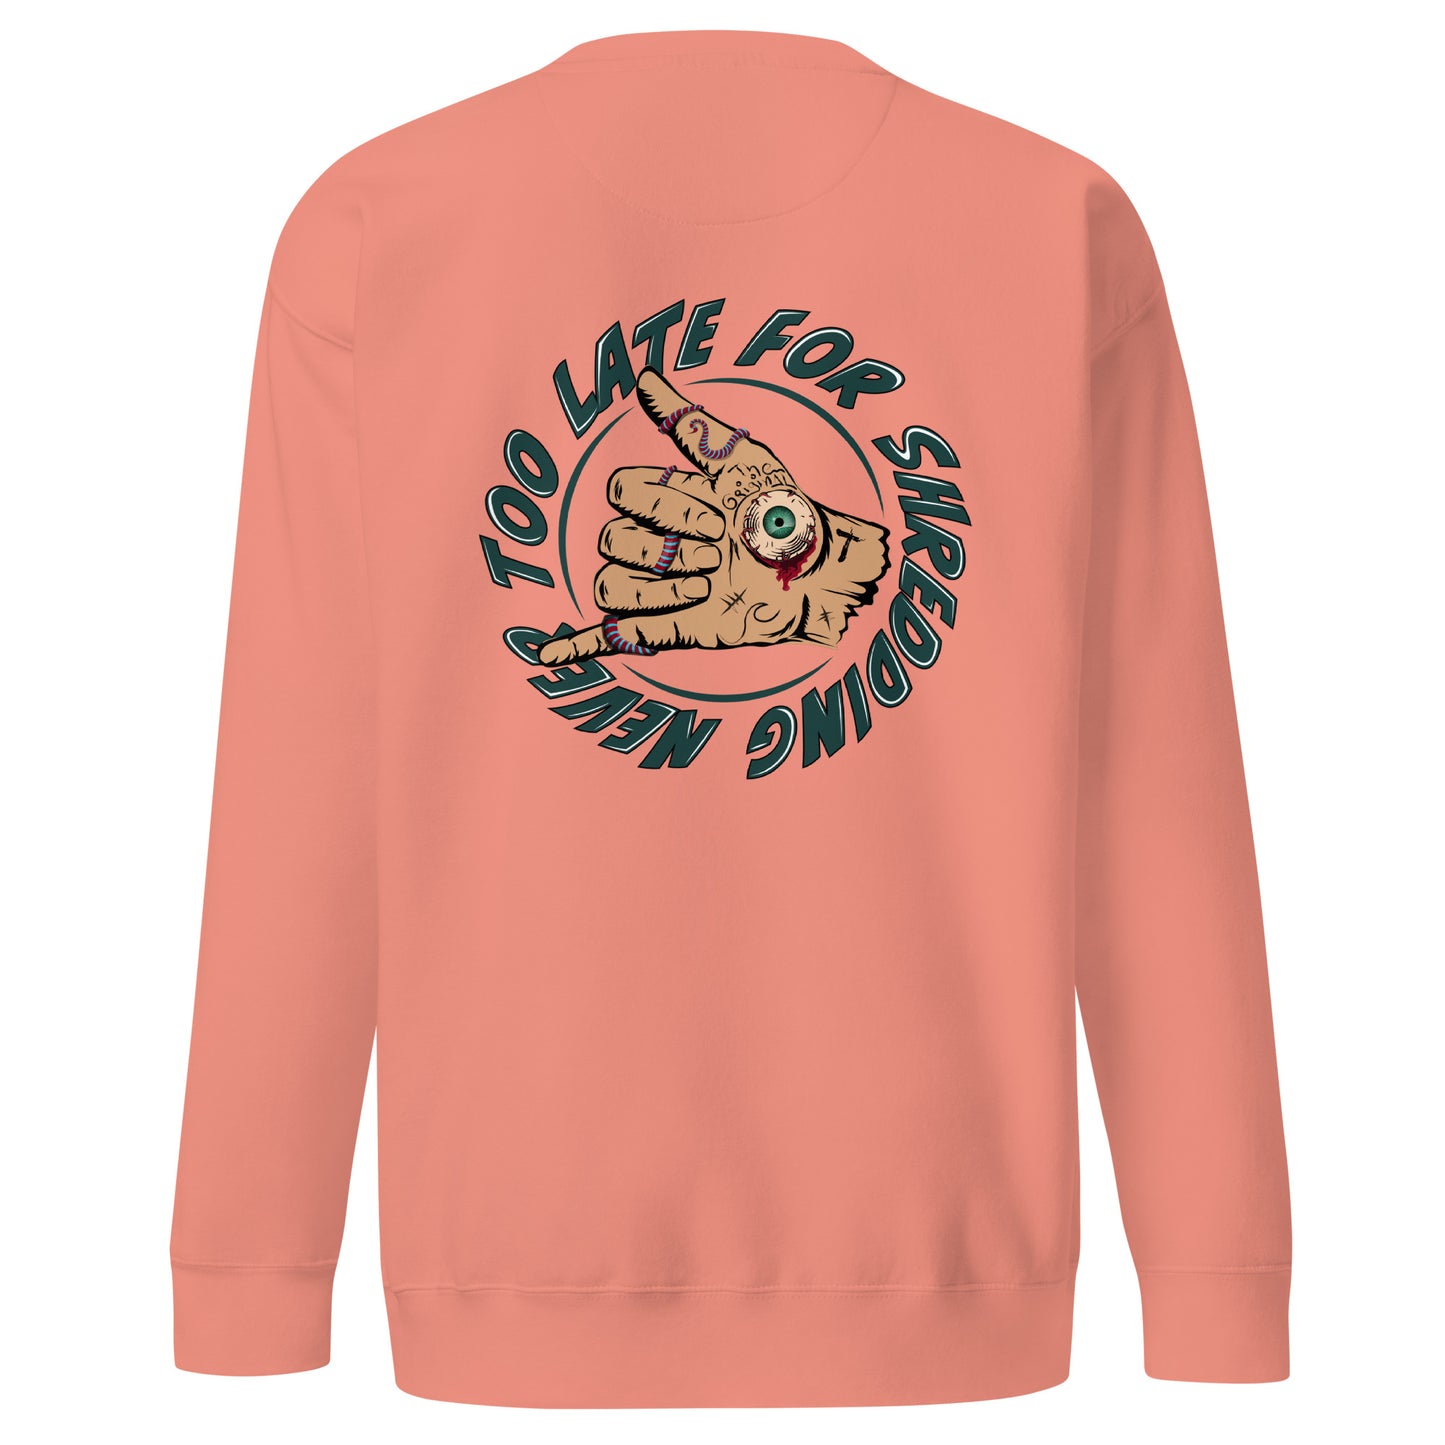 Sweatshirt Never Too Late shaka hand volcom style surfeur, avec le logo Late surfoard, sweat unisex de dos couleur rose